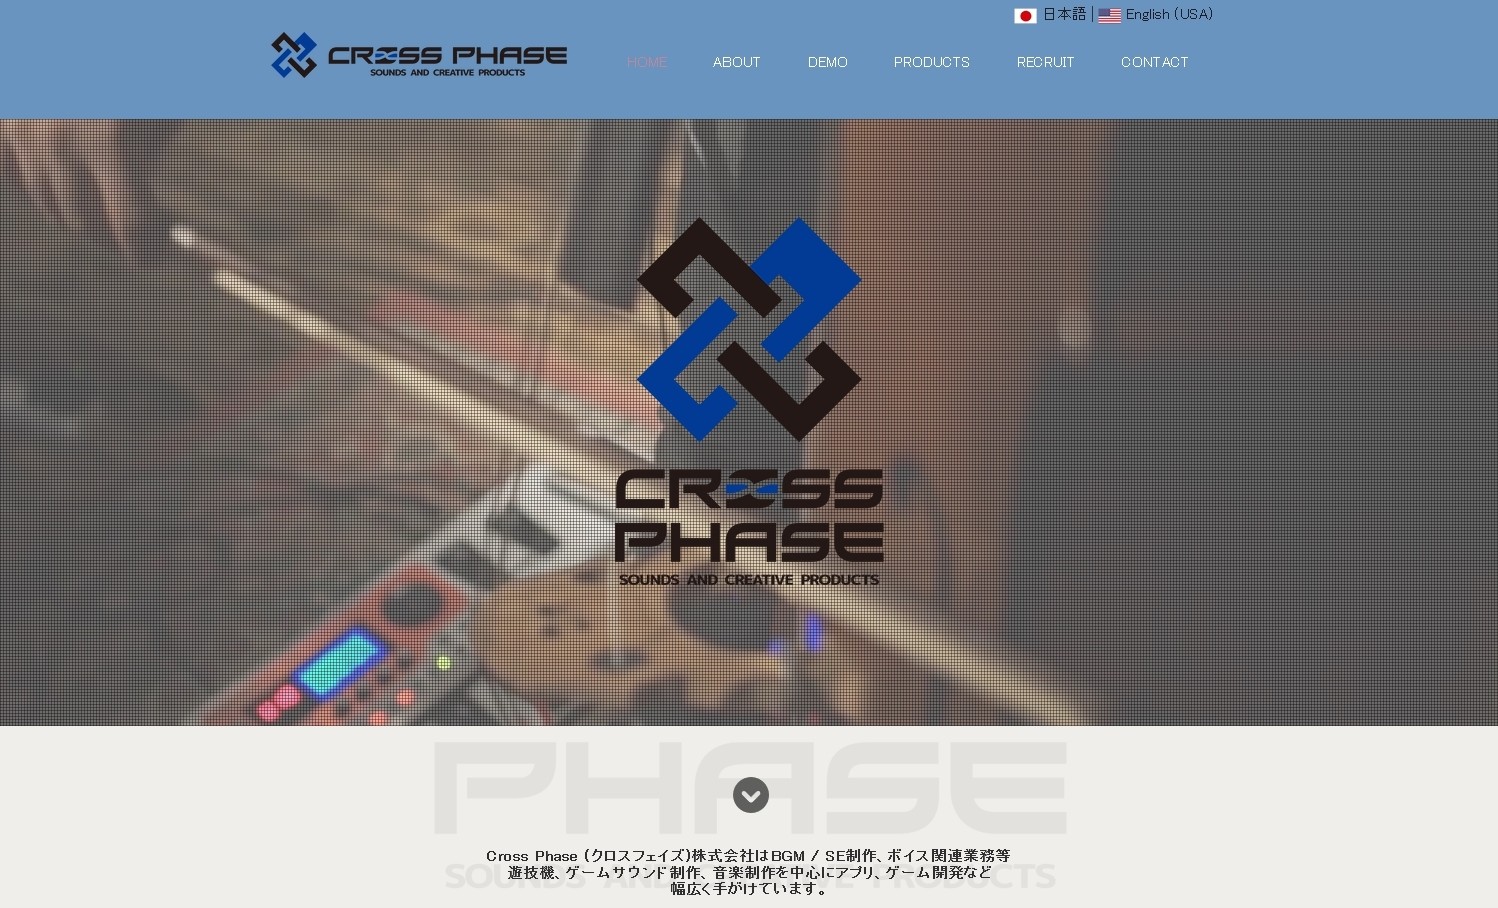 Cross Phase 株式会社のCross Phase 株式会社サービス